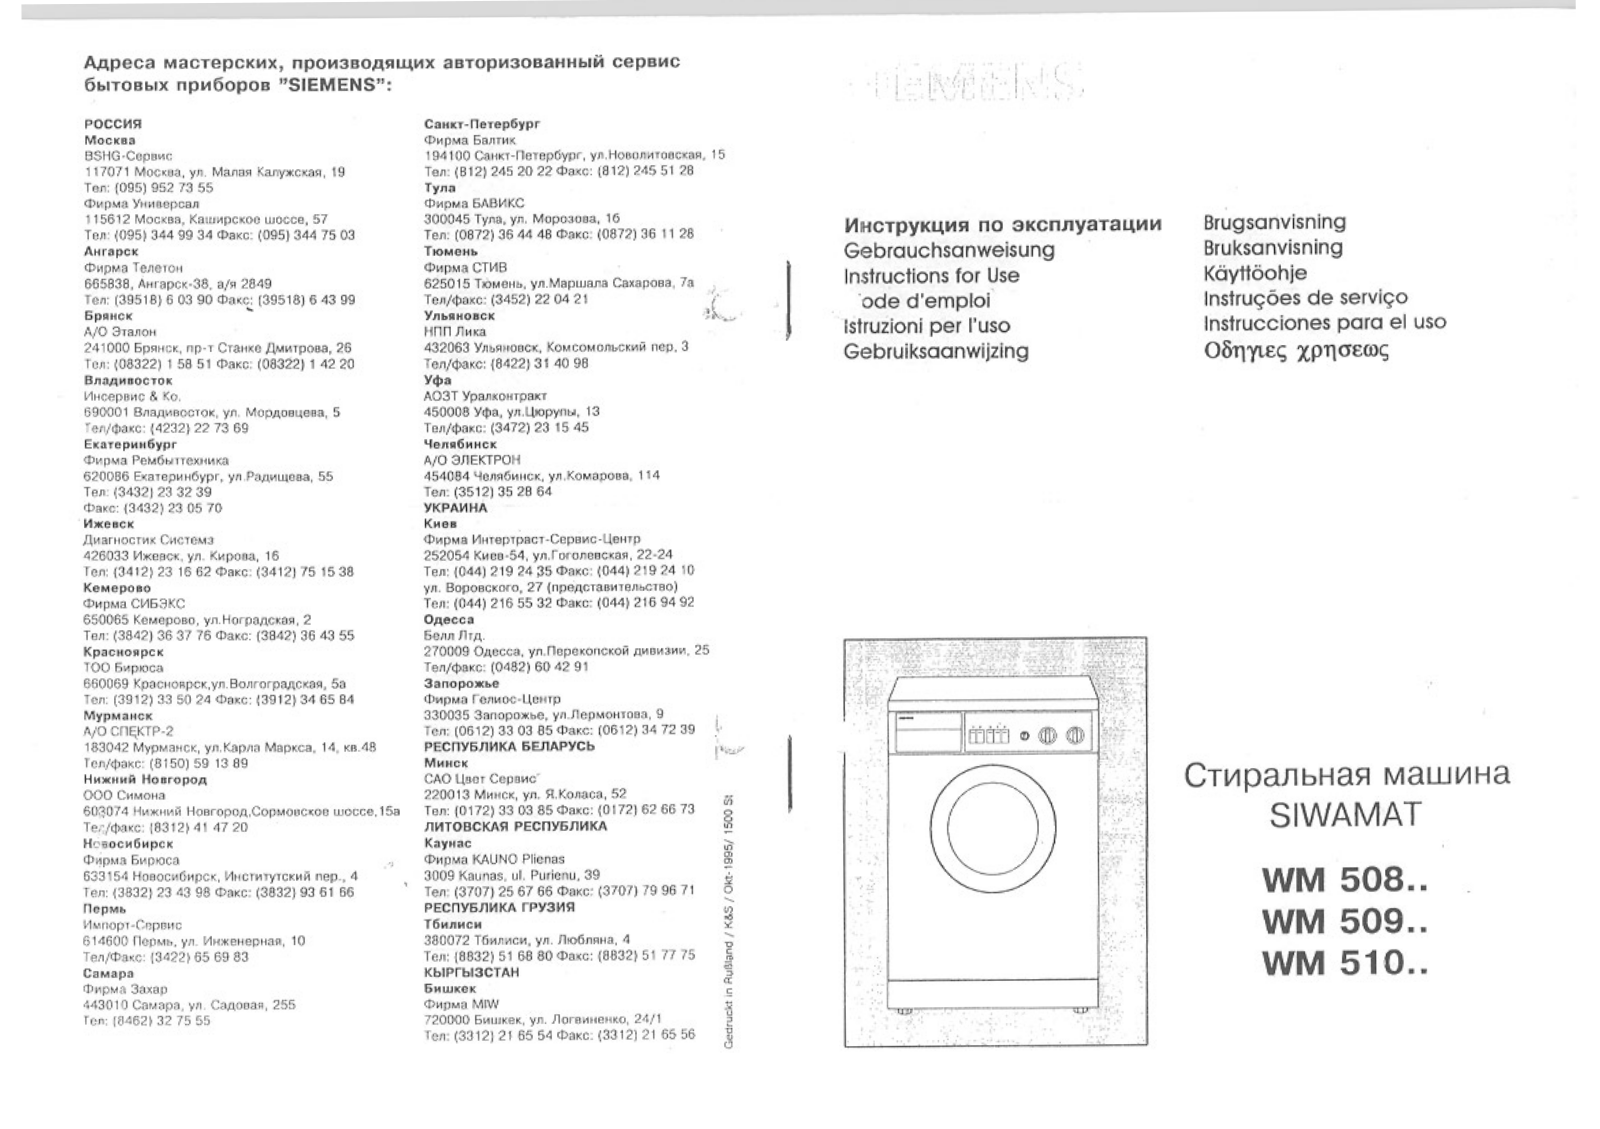 Siemens Siwamat 5080, Siwamat 5100, Siwamat 5103, Siwamat 5090, WM51003 User Manual